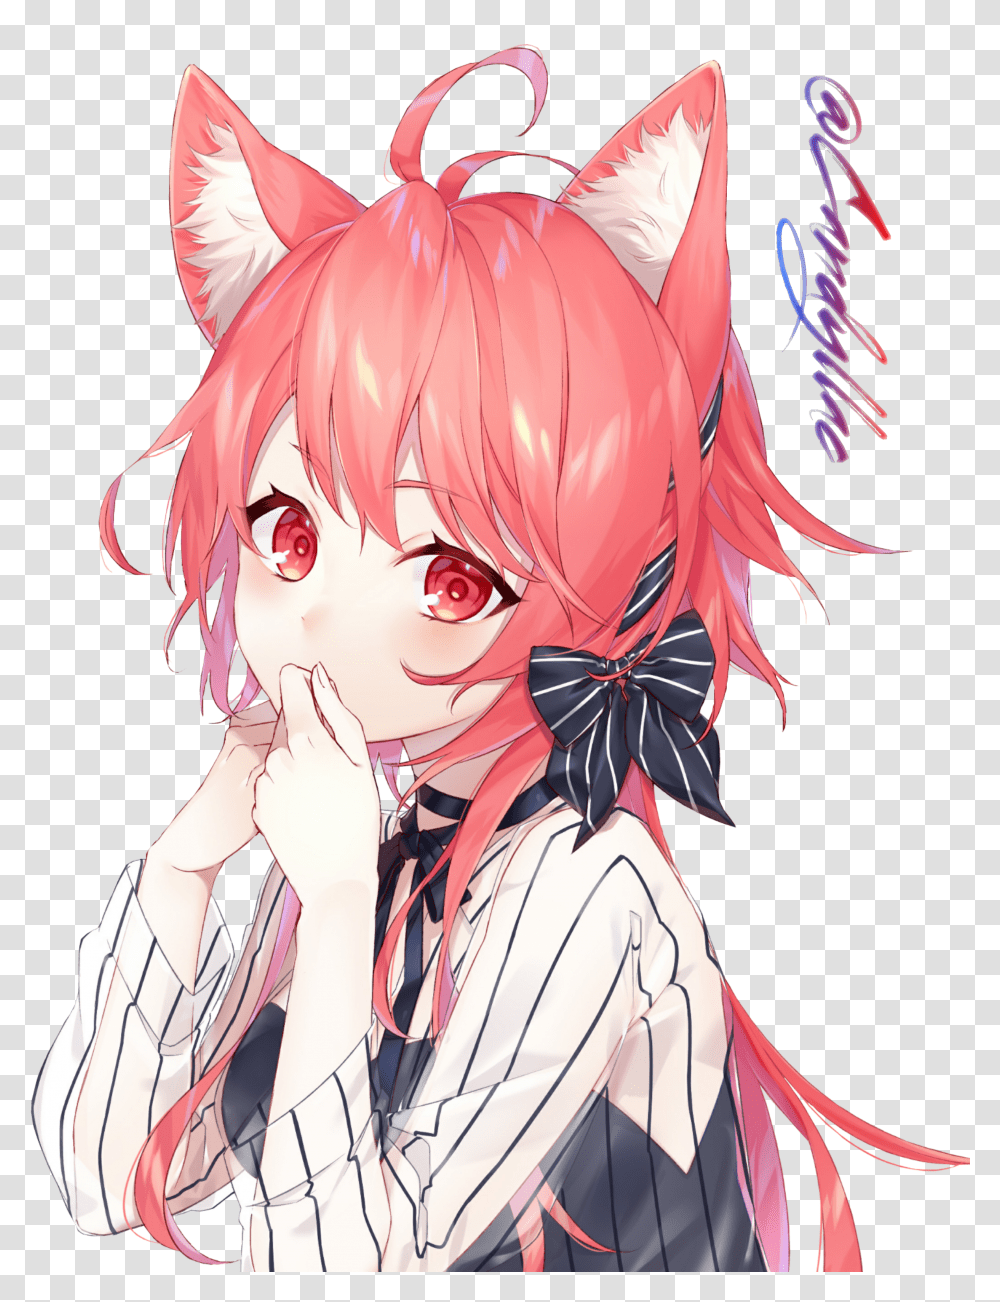 Cute Fox Anime Girl Transparent Png